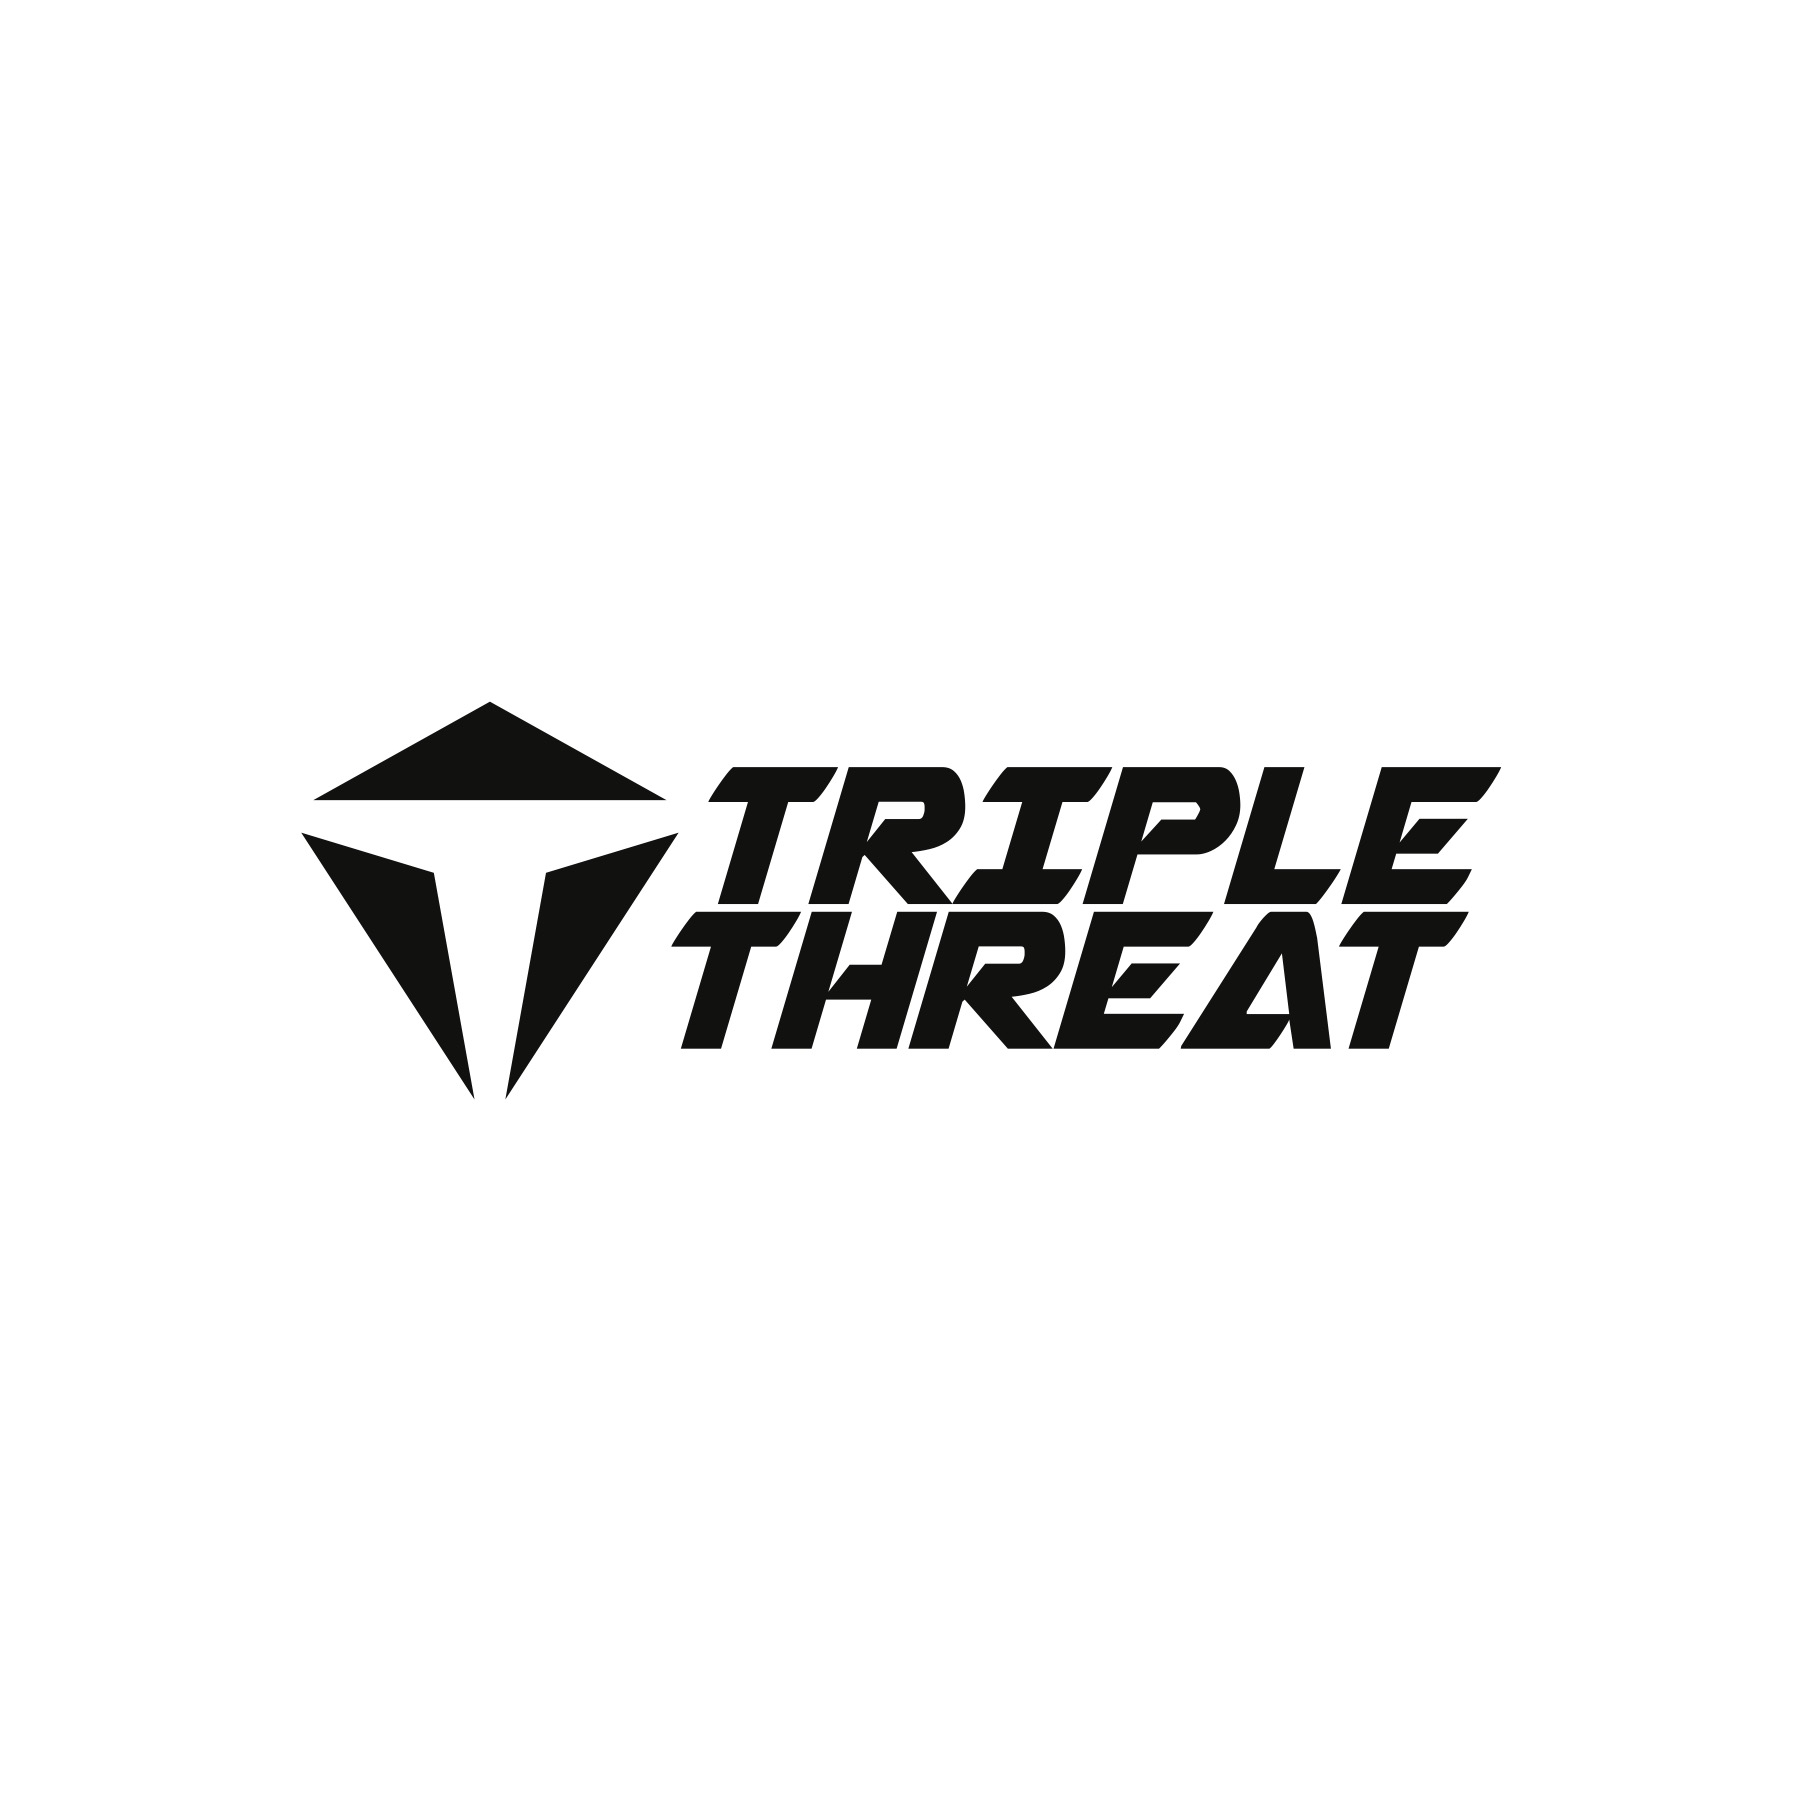 Triple Threat